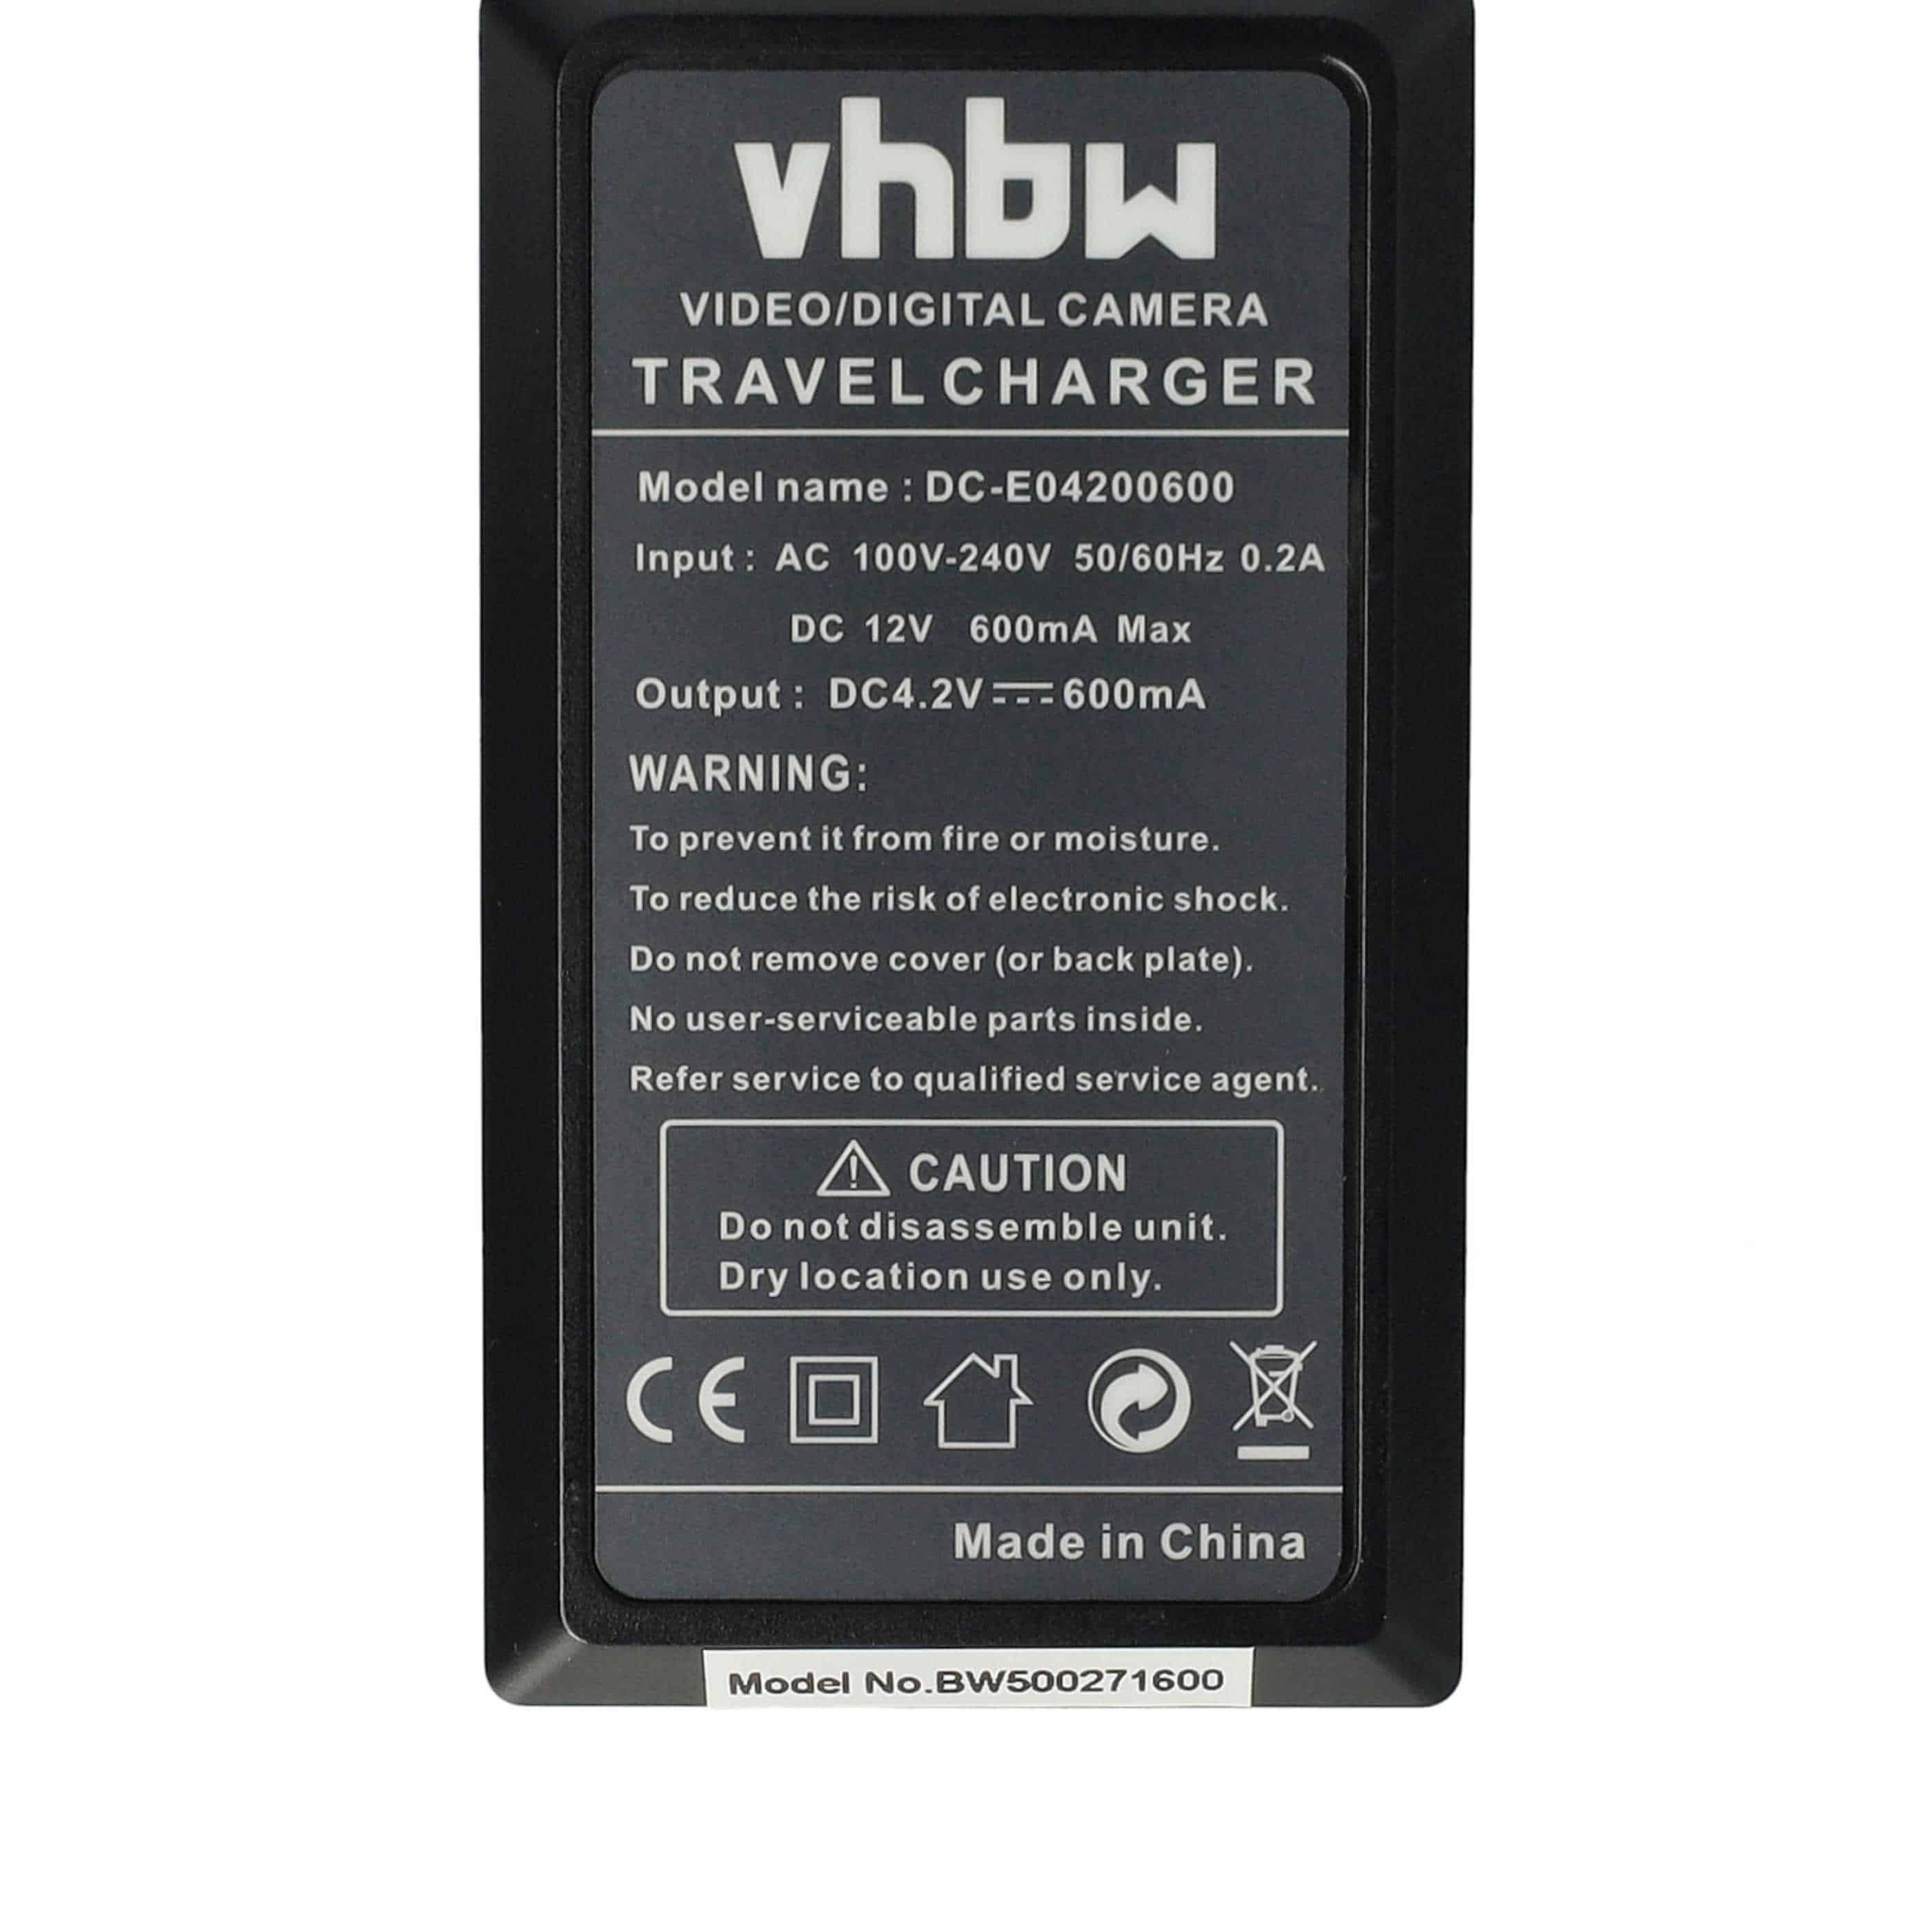 Battery Charger suitable for Optio E75 Camera etc. - 0.6 A, 4.2 V